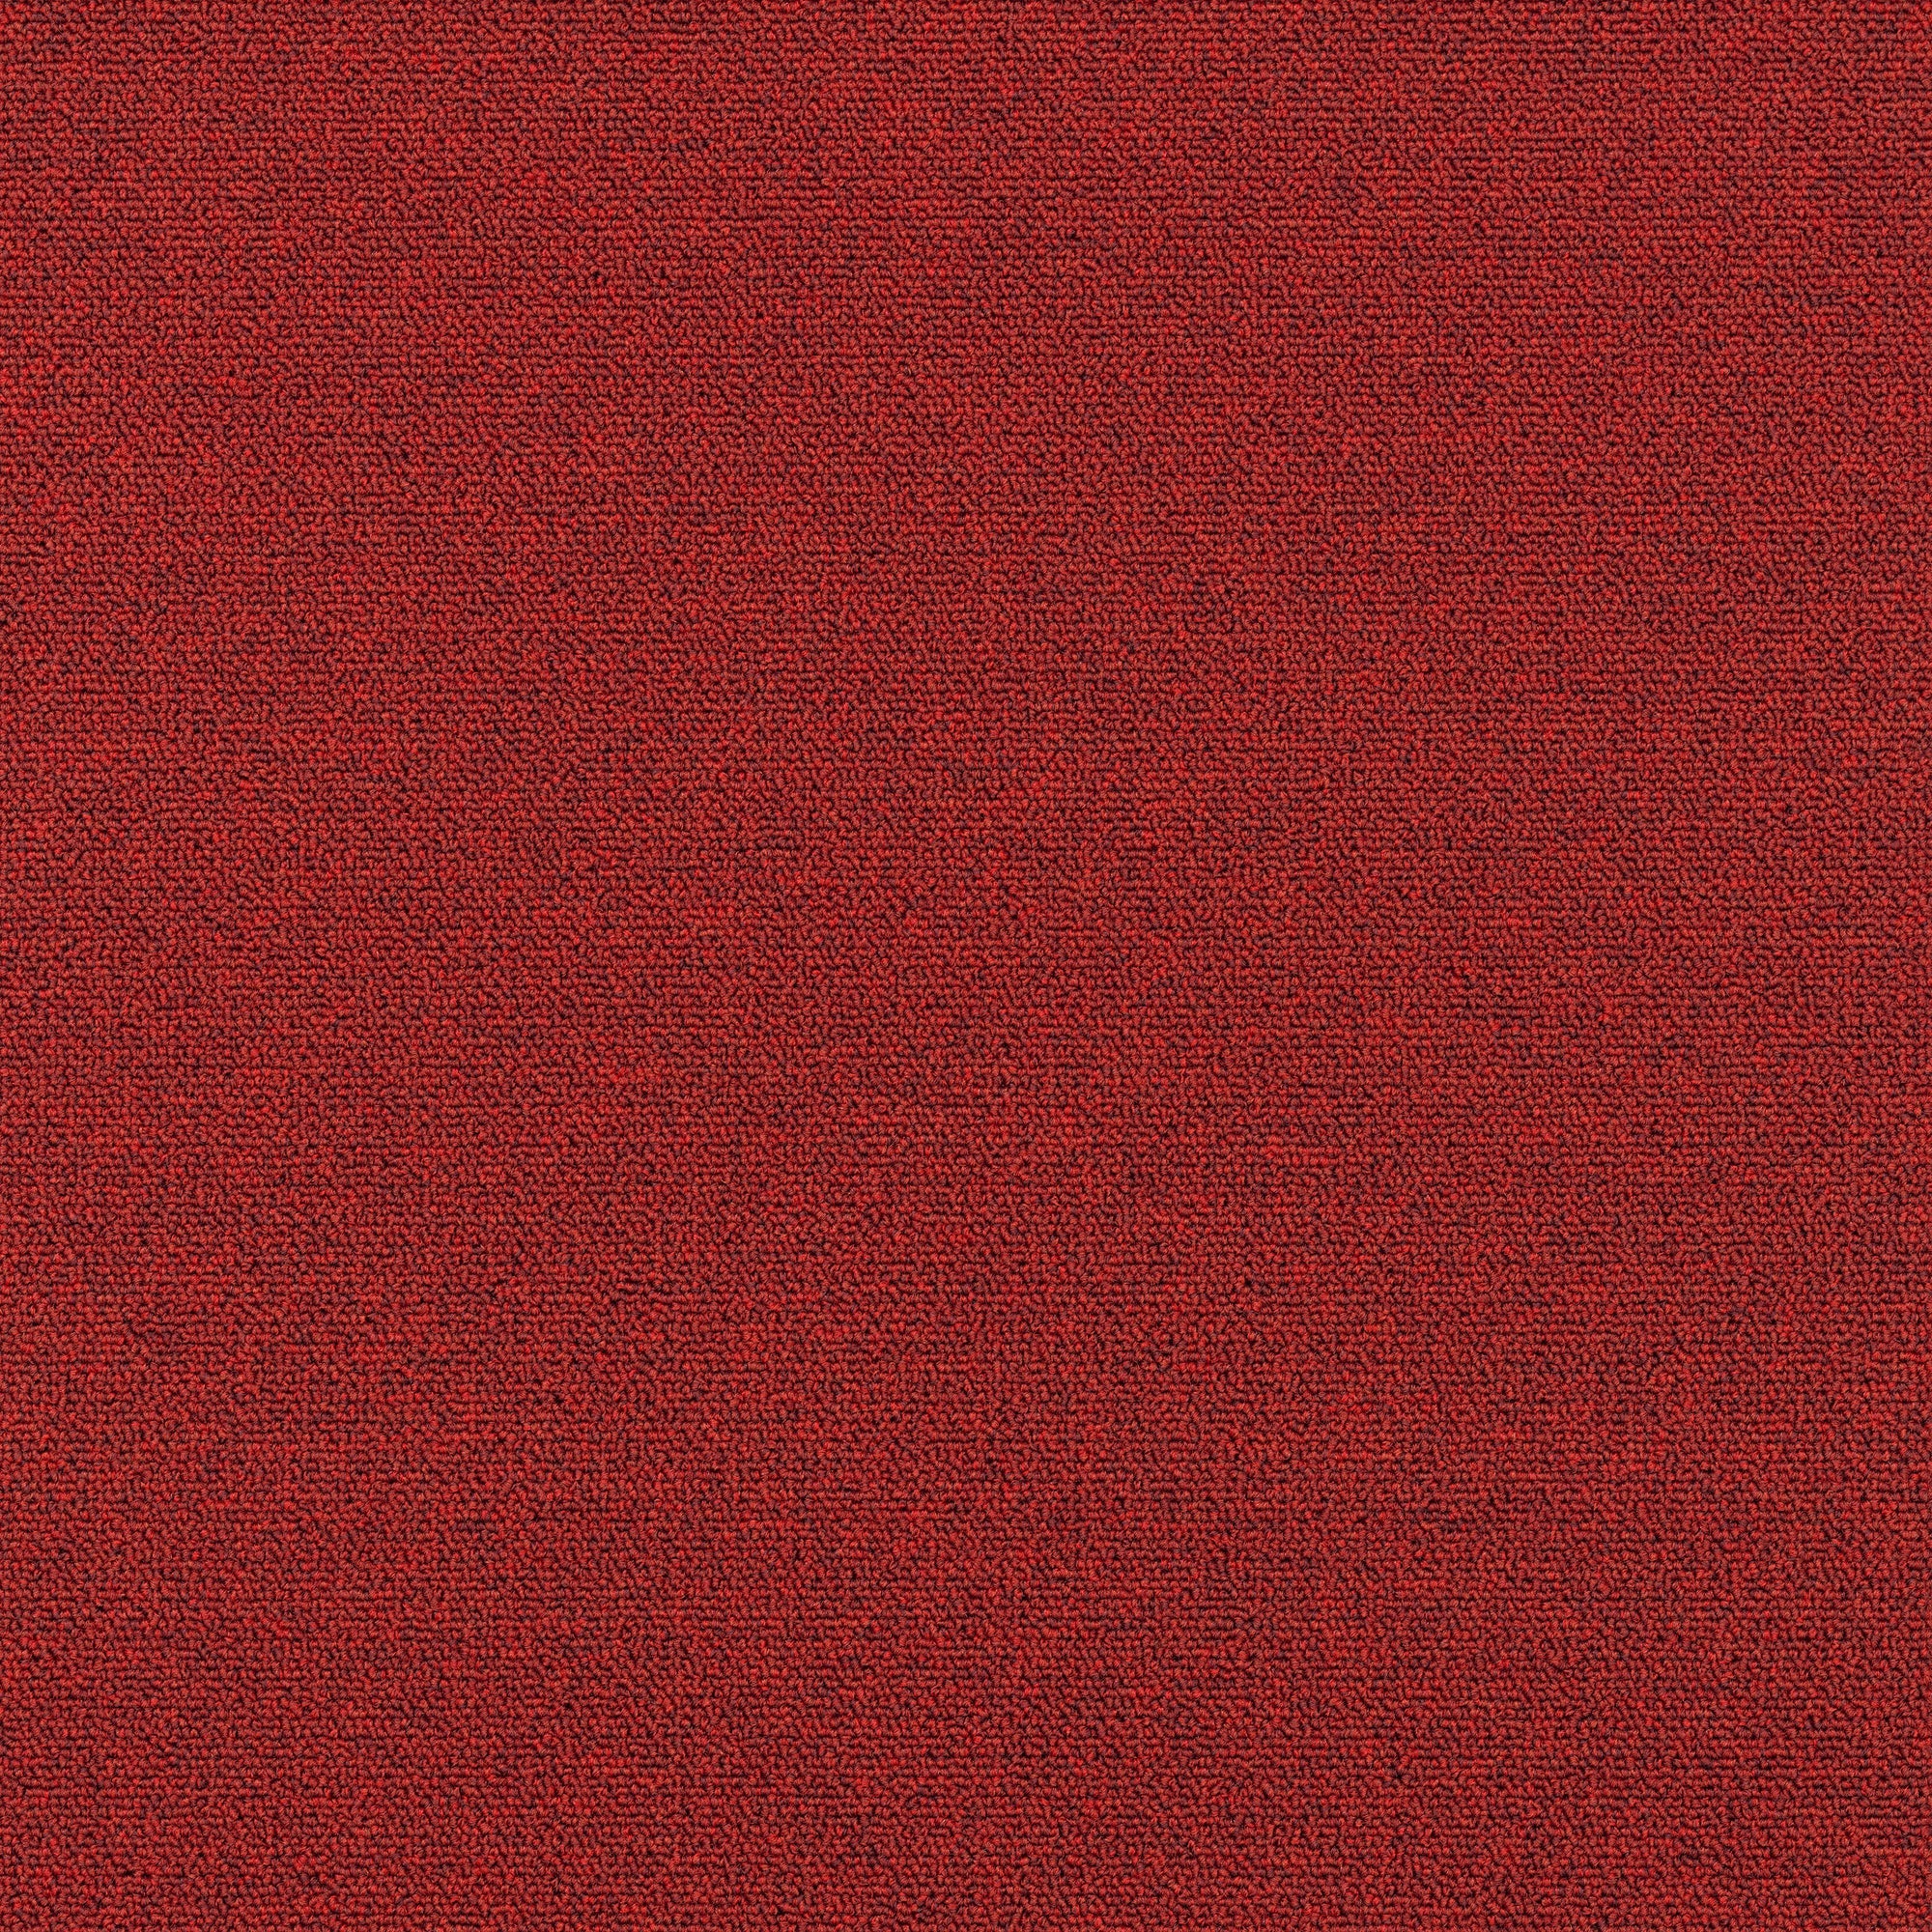 Plusfloor New Viilea Summer Red carpet tiles for offices 100% Nylon